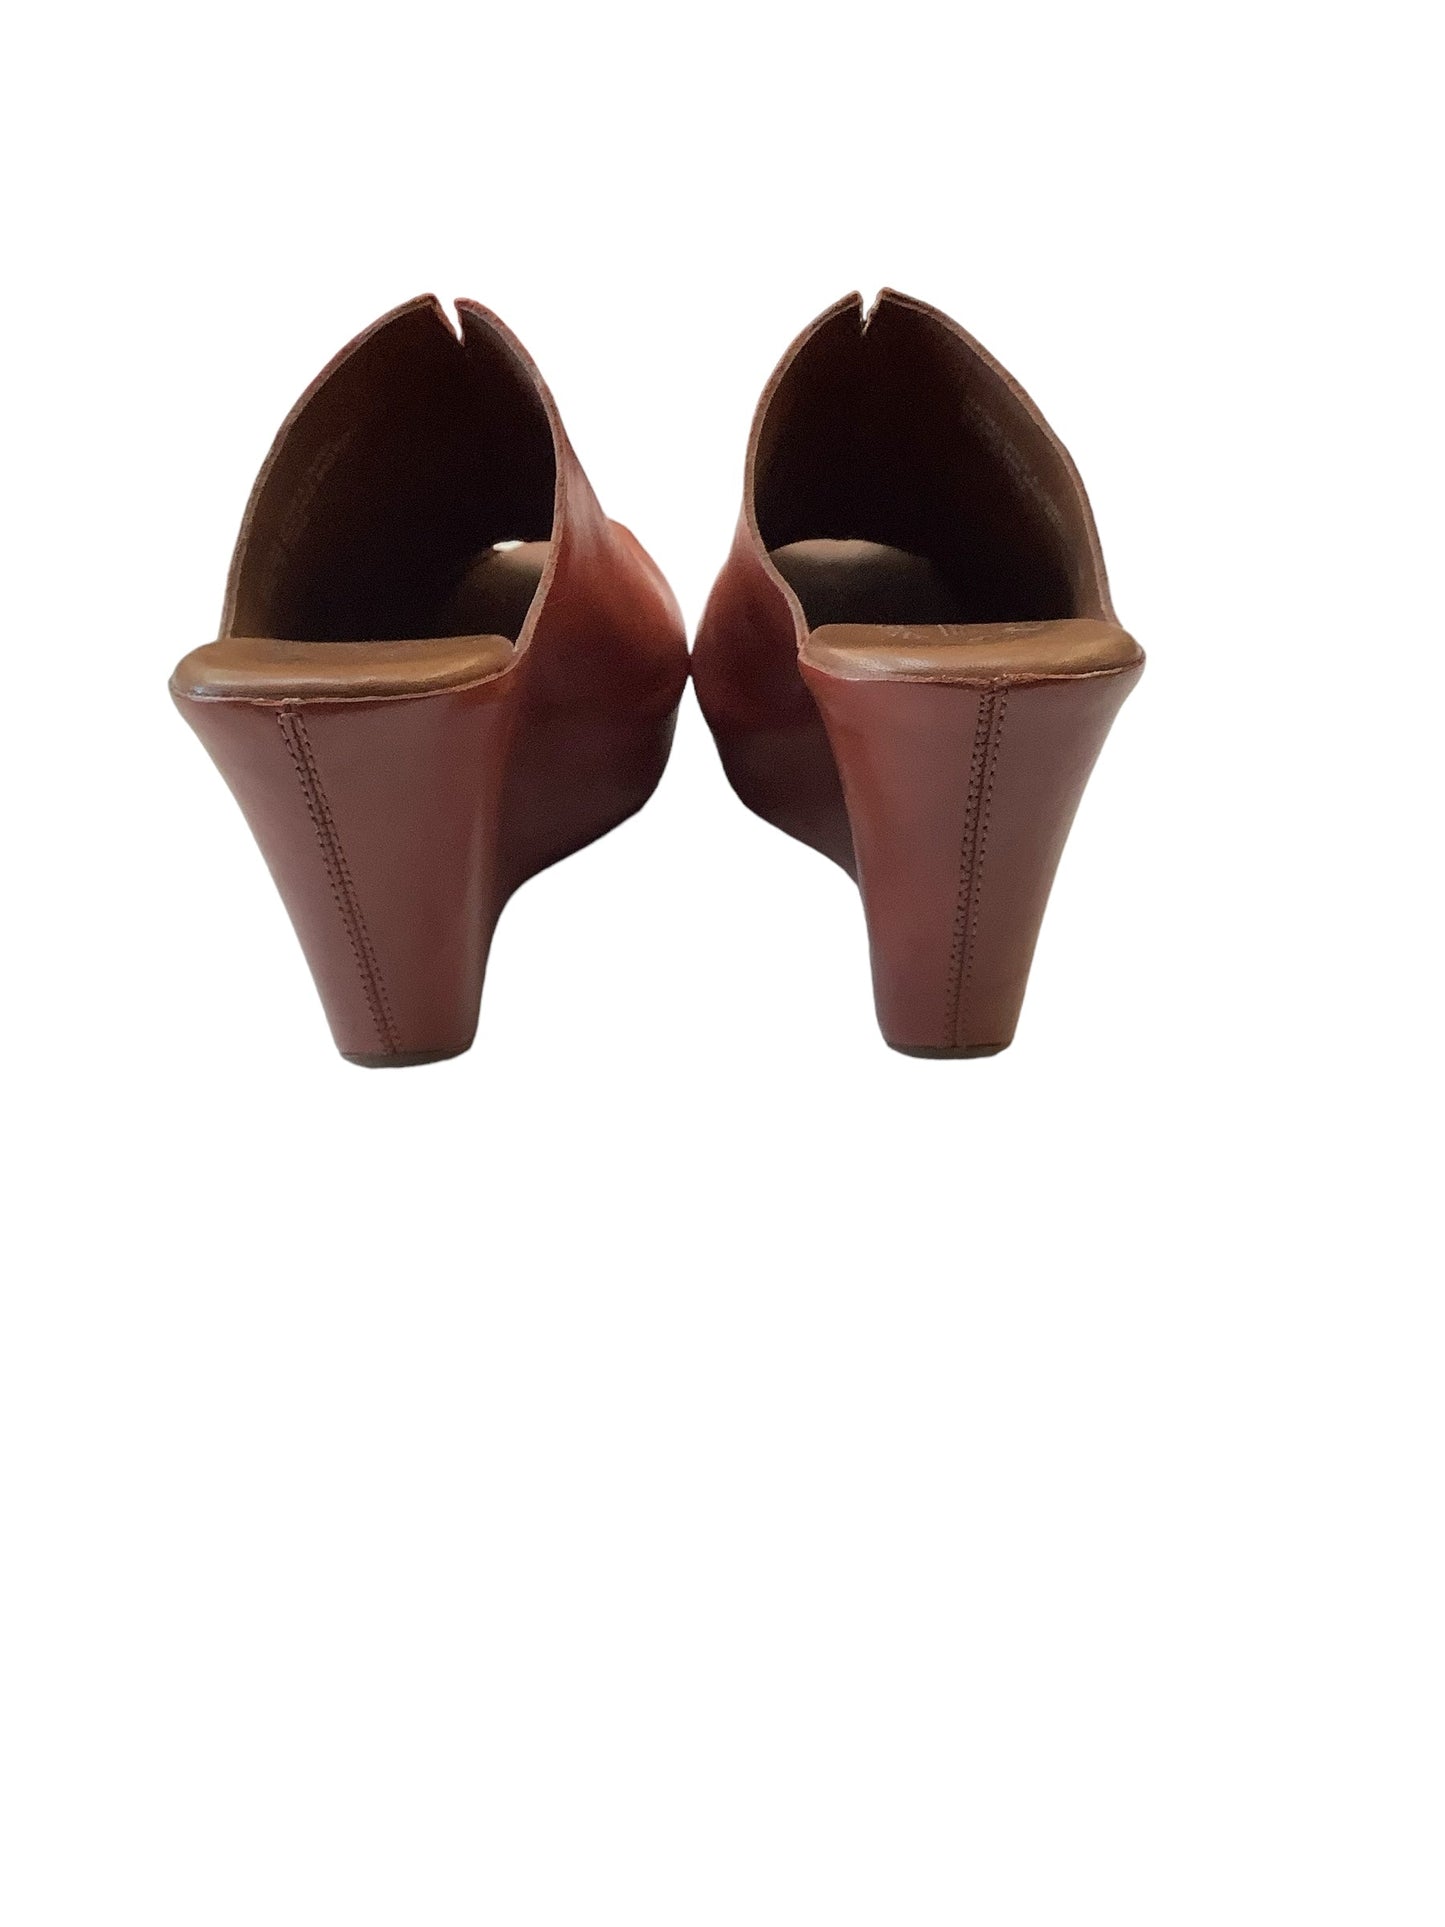 Brown Shoes Heels Wedge Kork Ease, Size 8